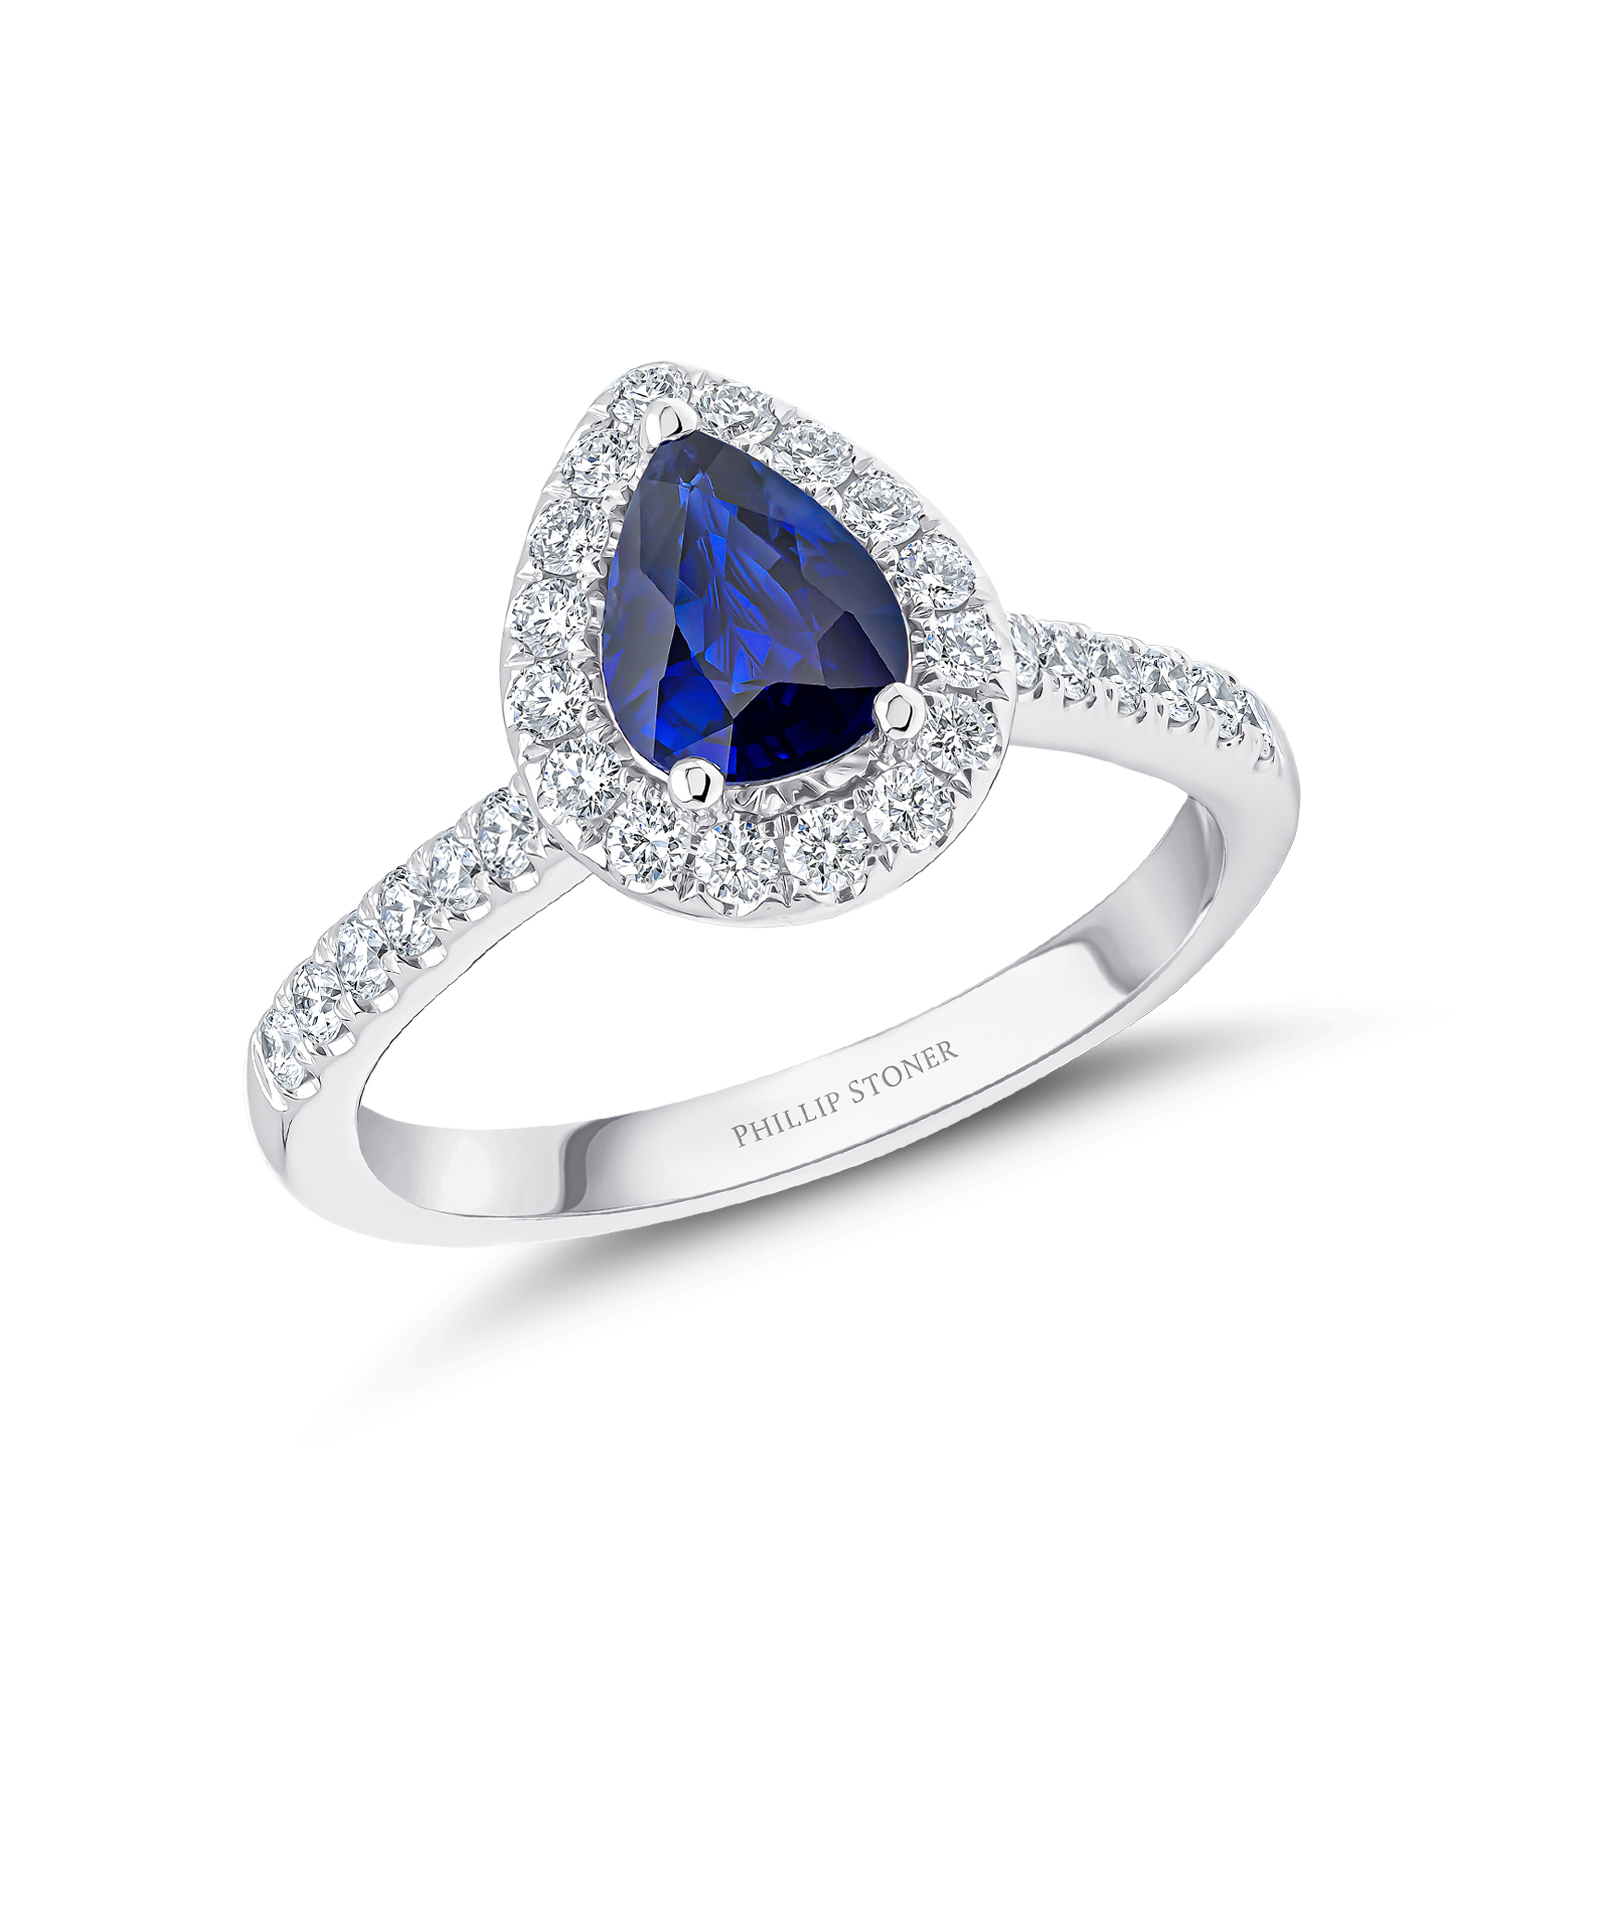 0.85ct Pear Sapphire & Diamond Cluster Ring - Phillip Stoner The Jeweller